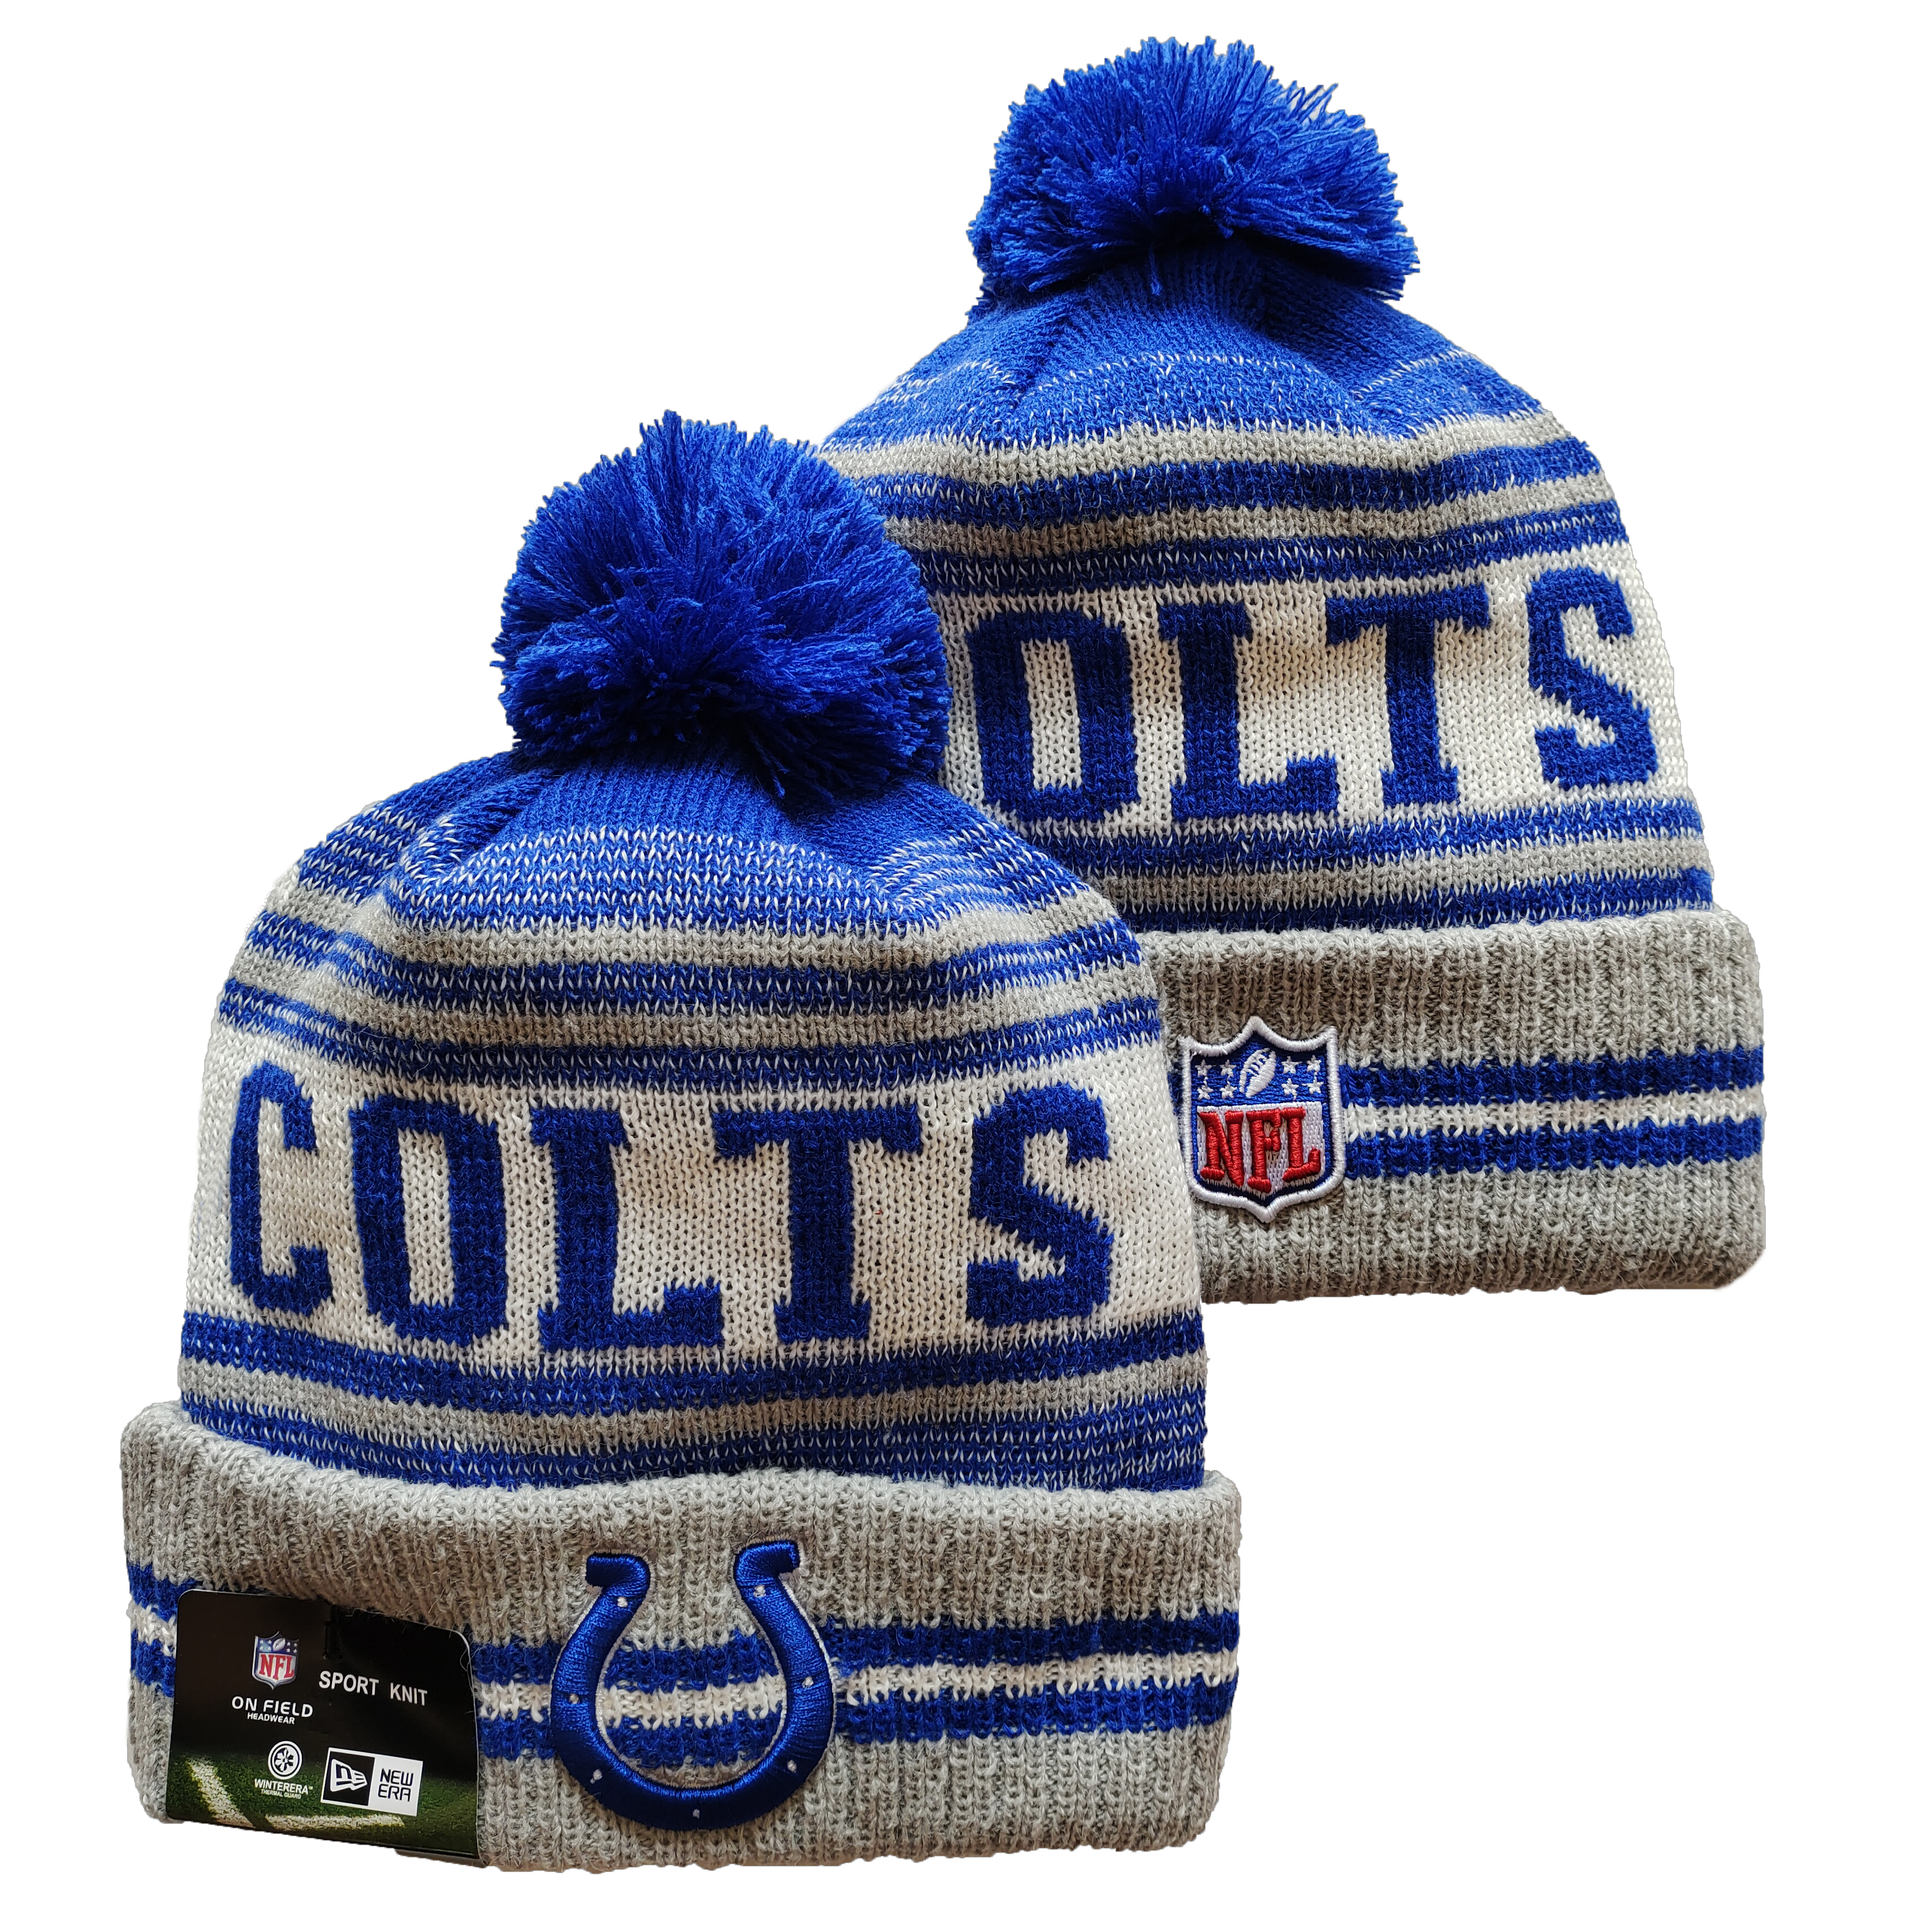 Colts Team Logo Royal and Gray Pom Cuffed Knit Hat YD